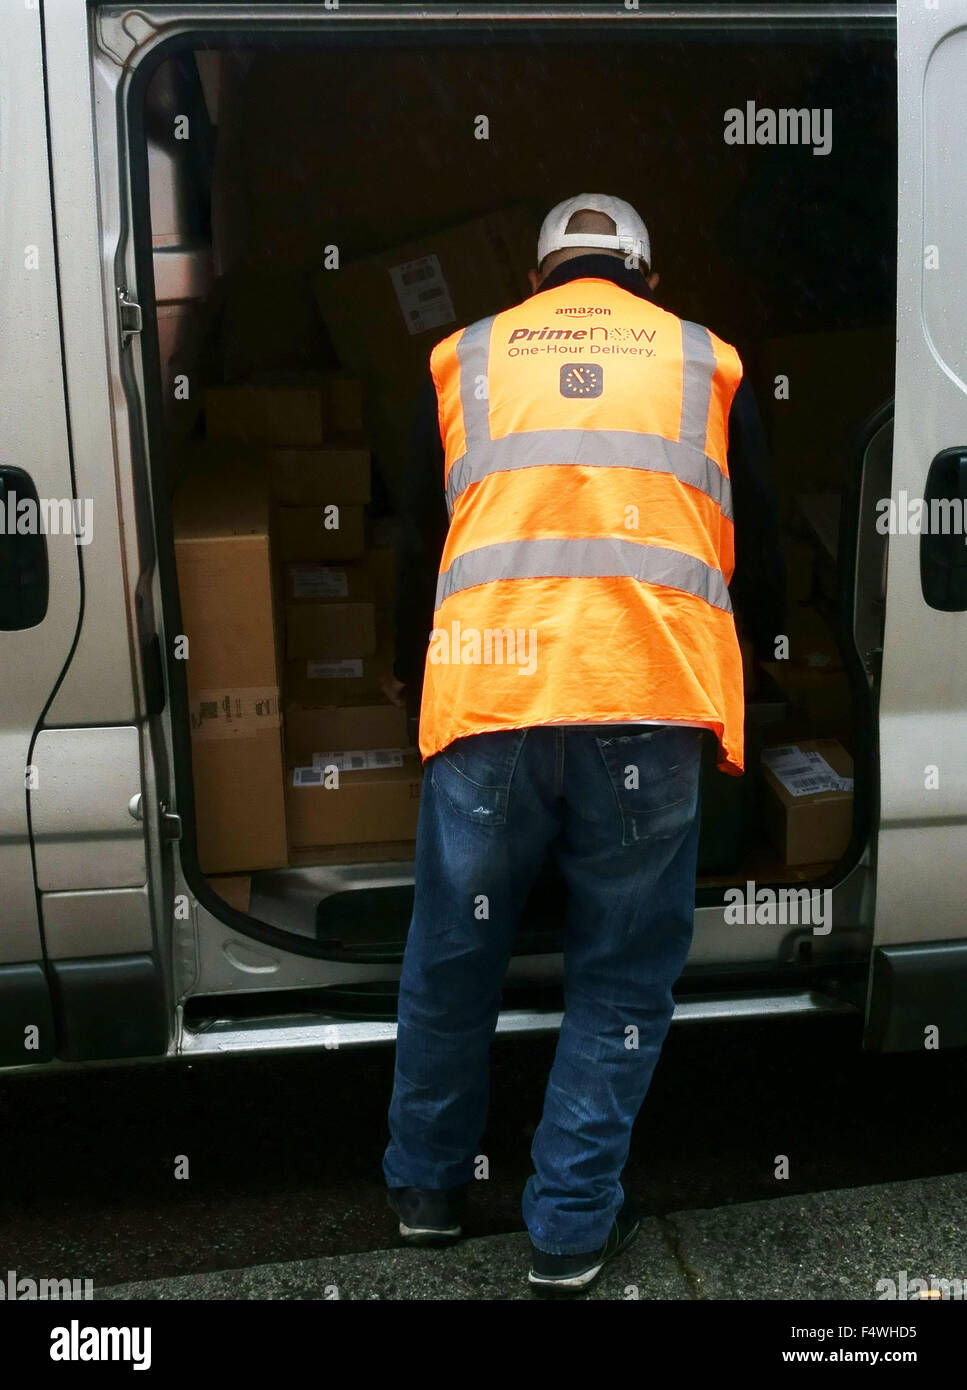 Amazon Prime jetzt 1 Stunde Lieferung Fahrzeug und Fahrer, London  Stockfotografie - Alamy